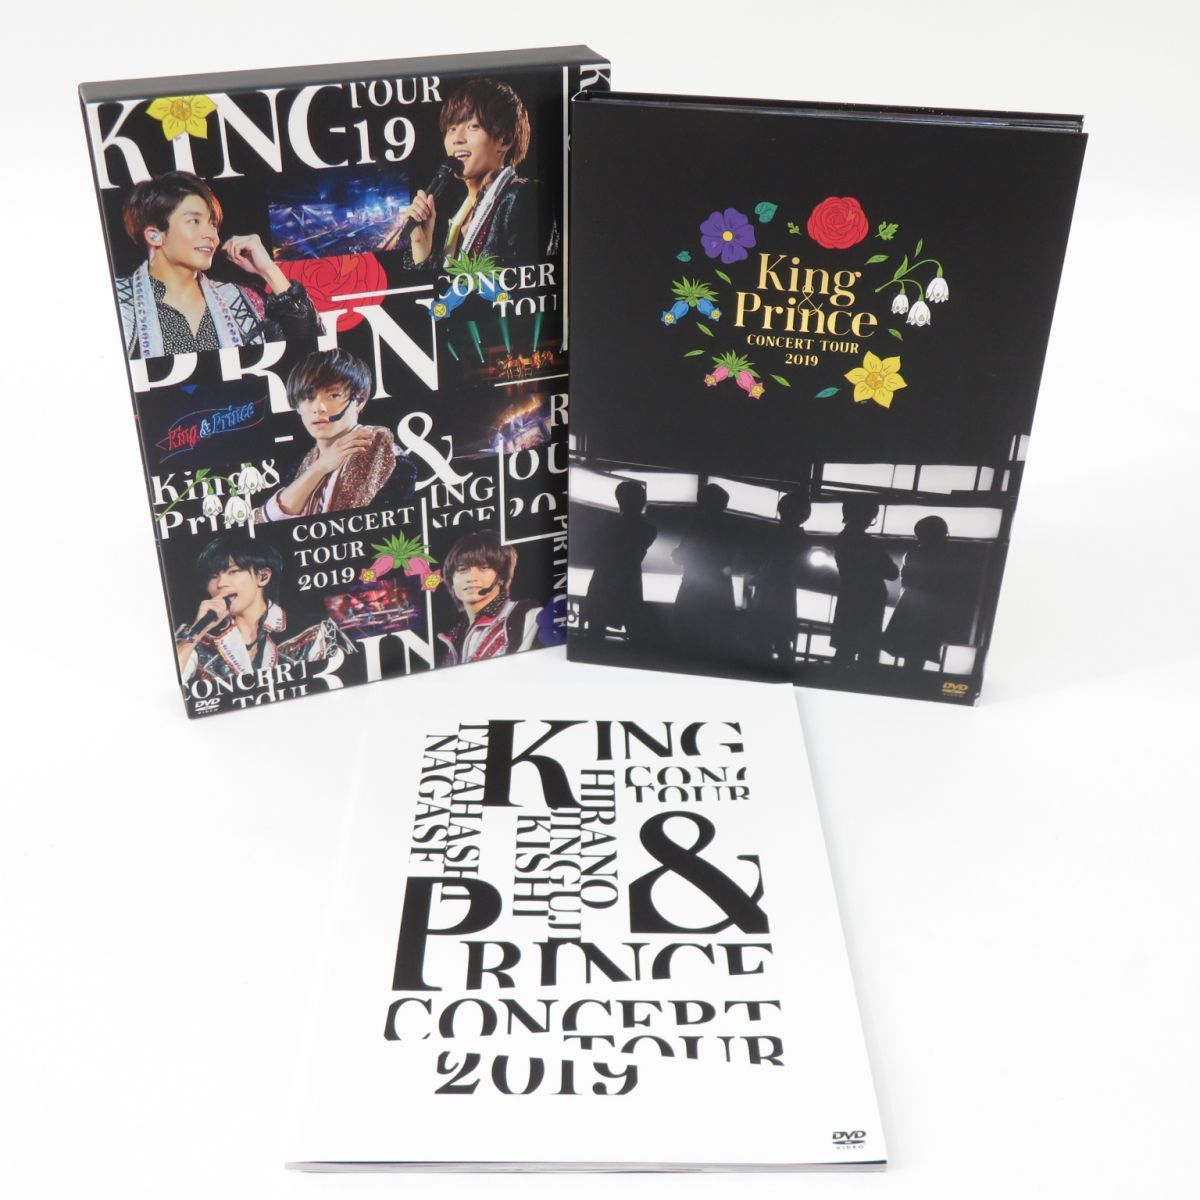 King & Prince CONCERT TOUR 2019 DVD(通常盤)